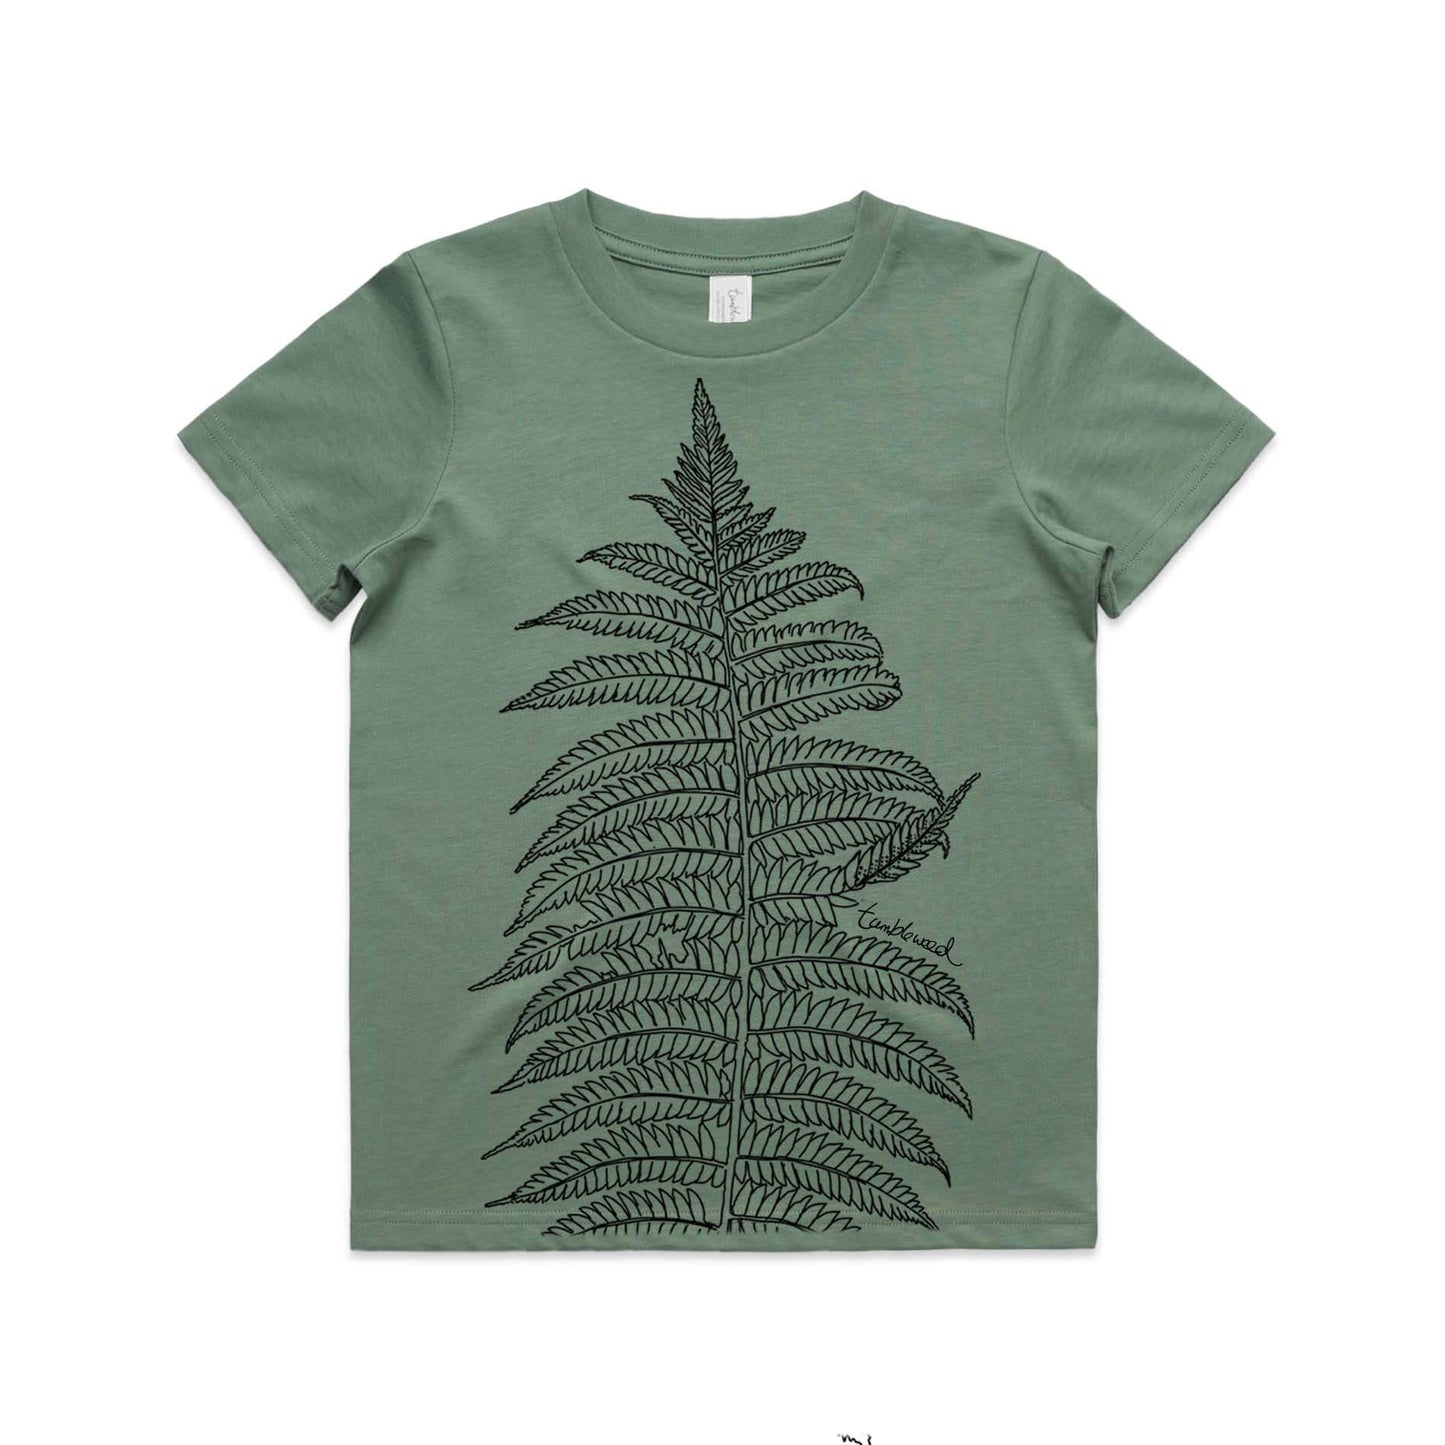 Sage, cotton kids' t-shirt with screen printed Silver fern/ponga design.